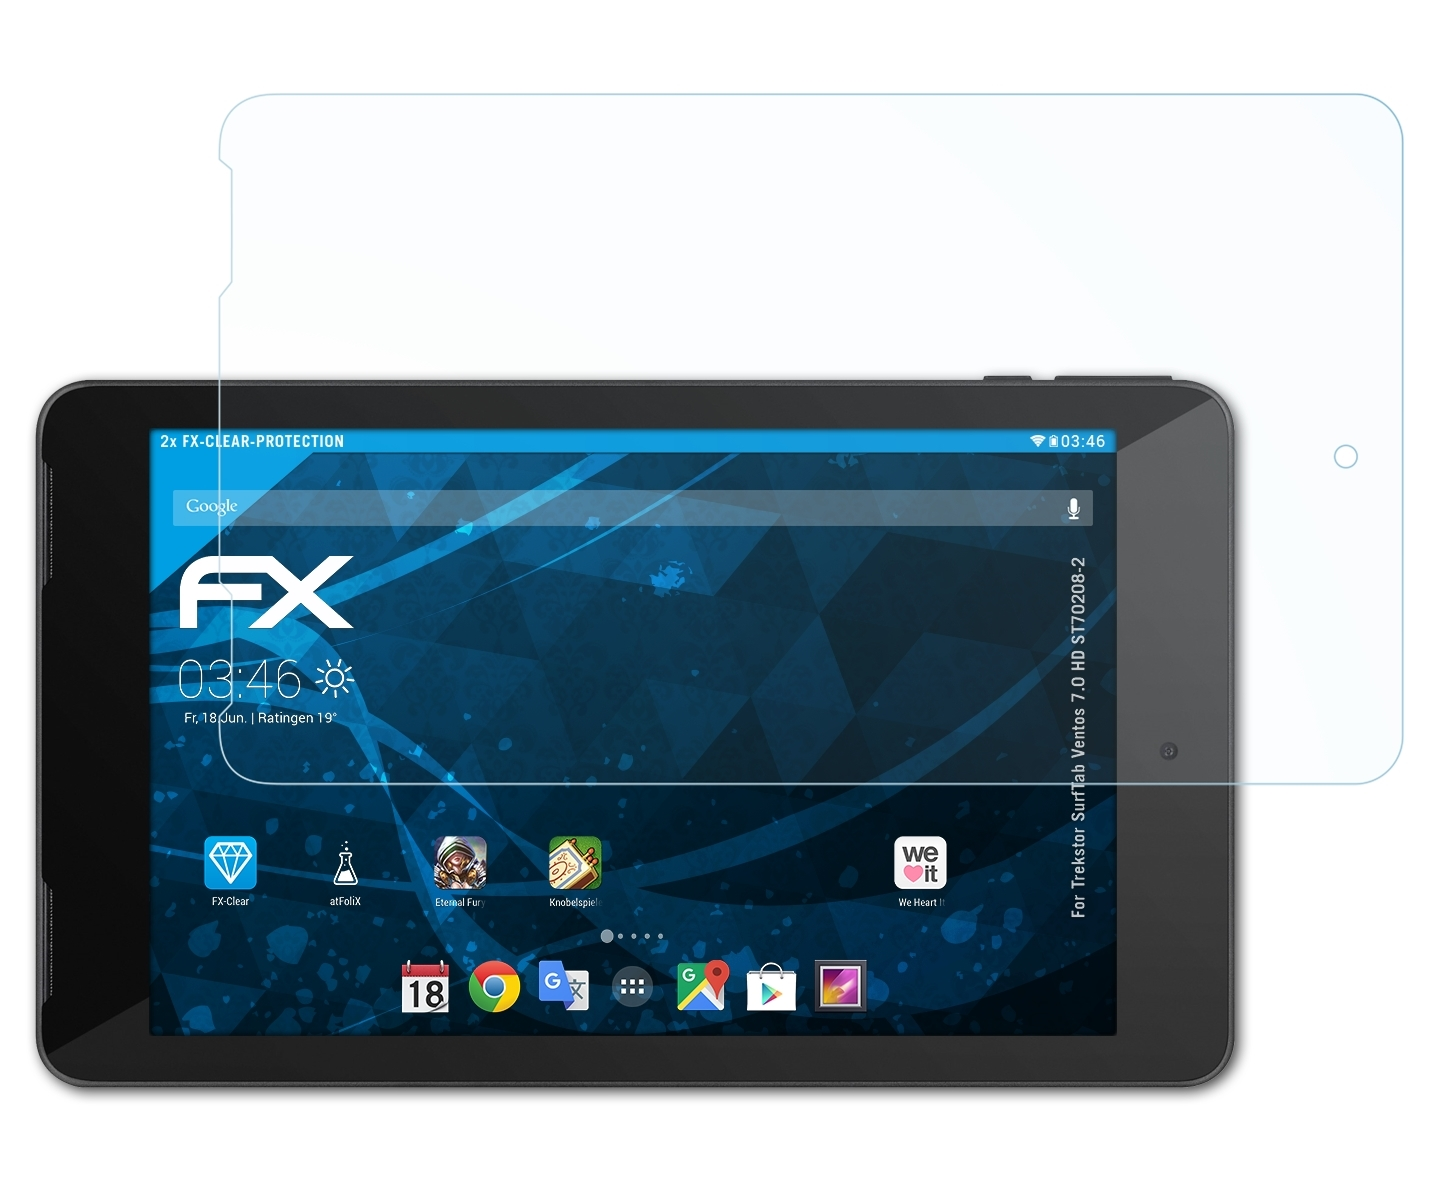 ATFOLIX 2x Displayschutz(für FX-Clear (ST70208-2)) SurfTab Trekstor Ventos HD 7.0